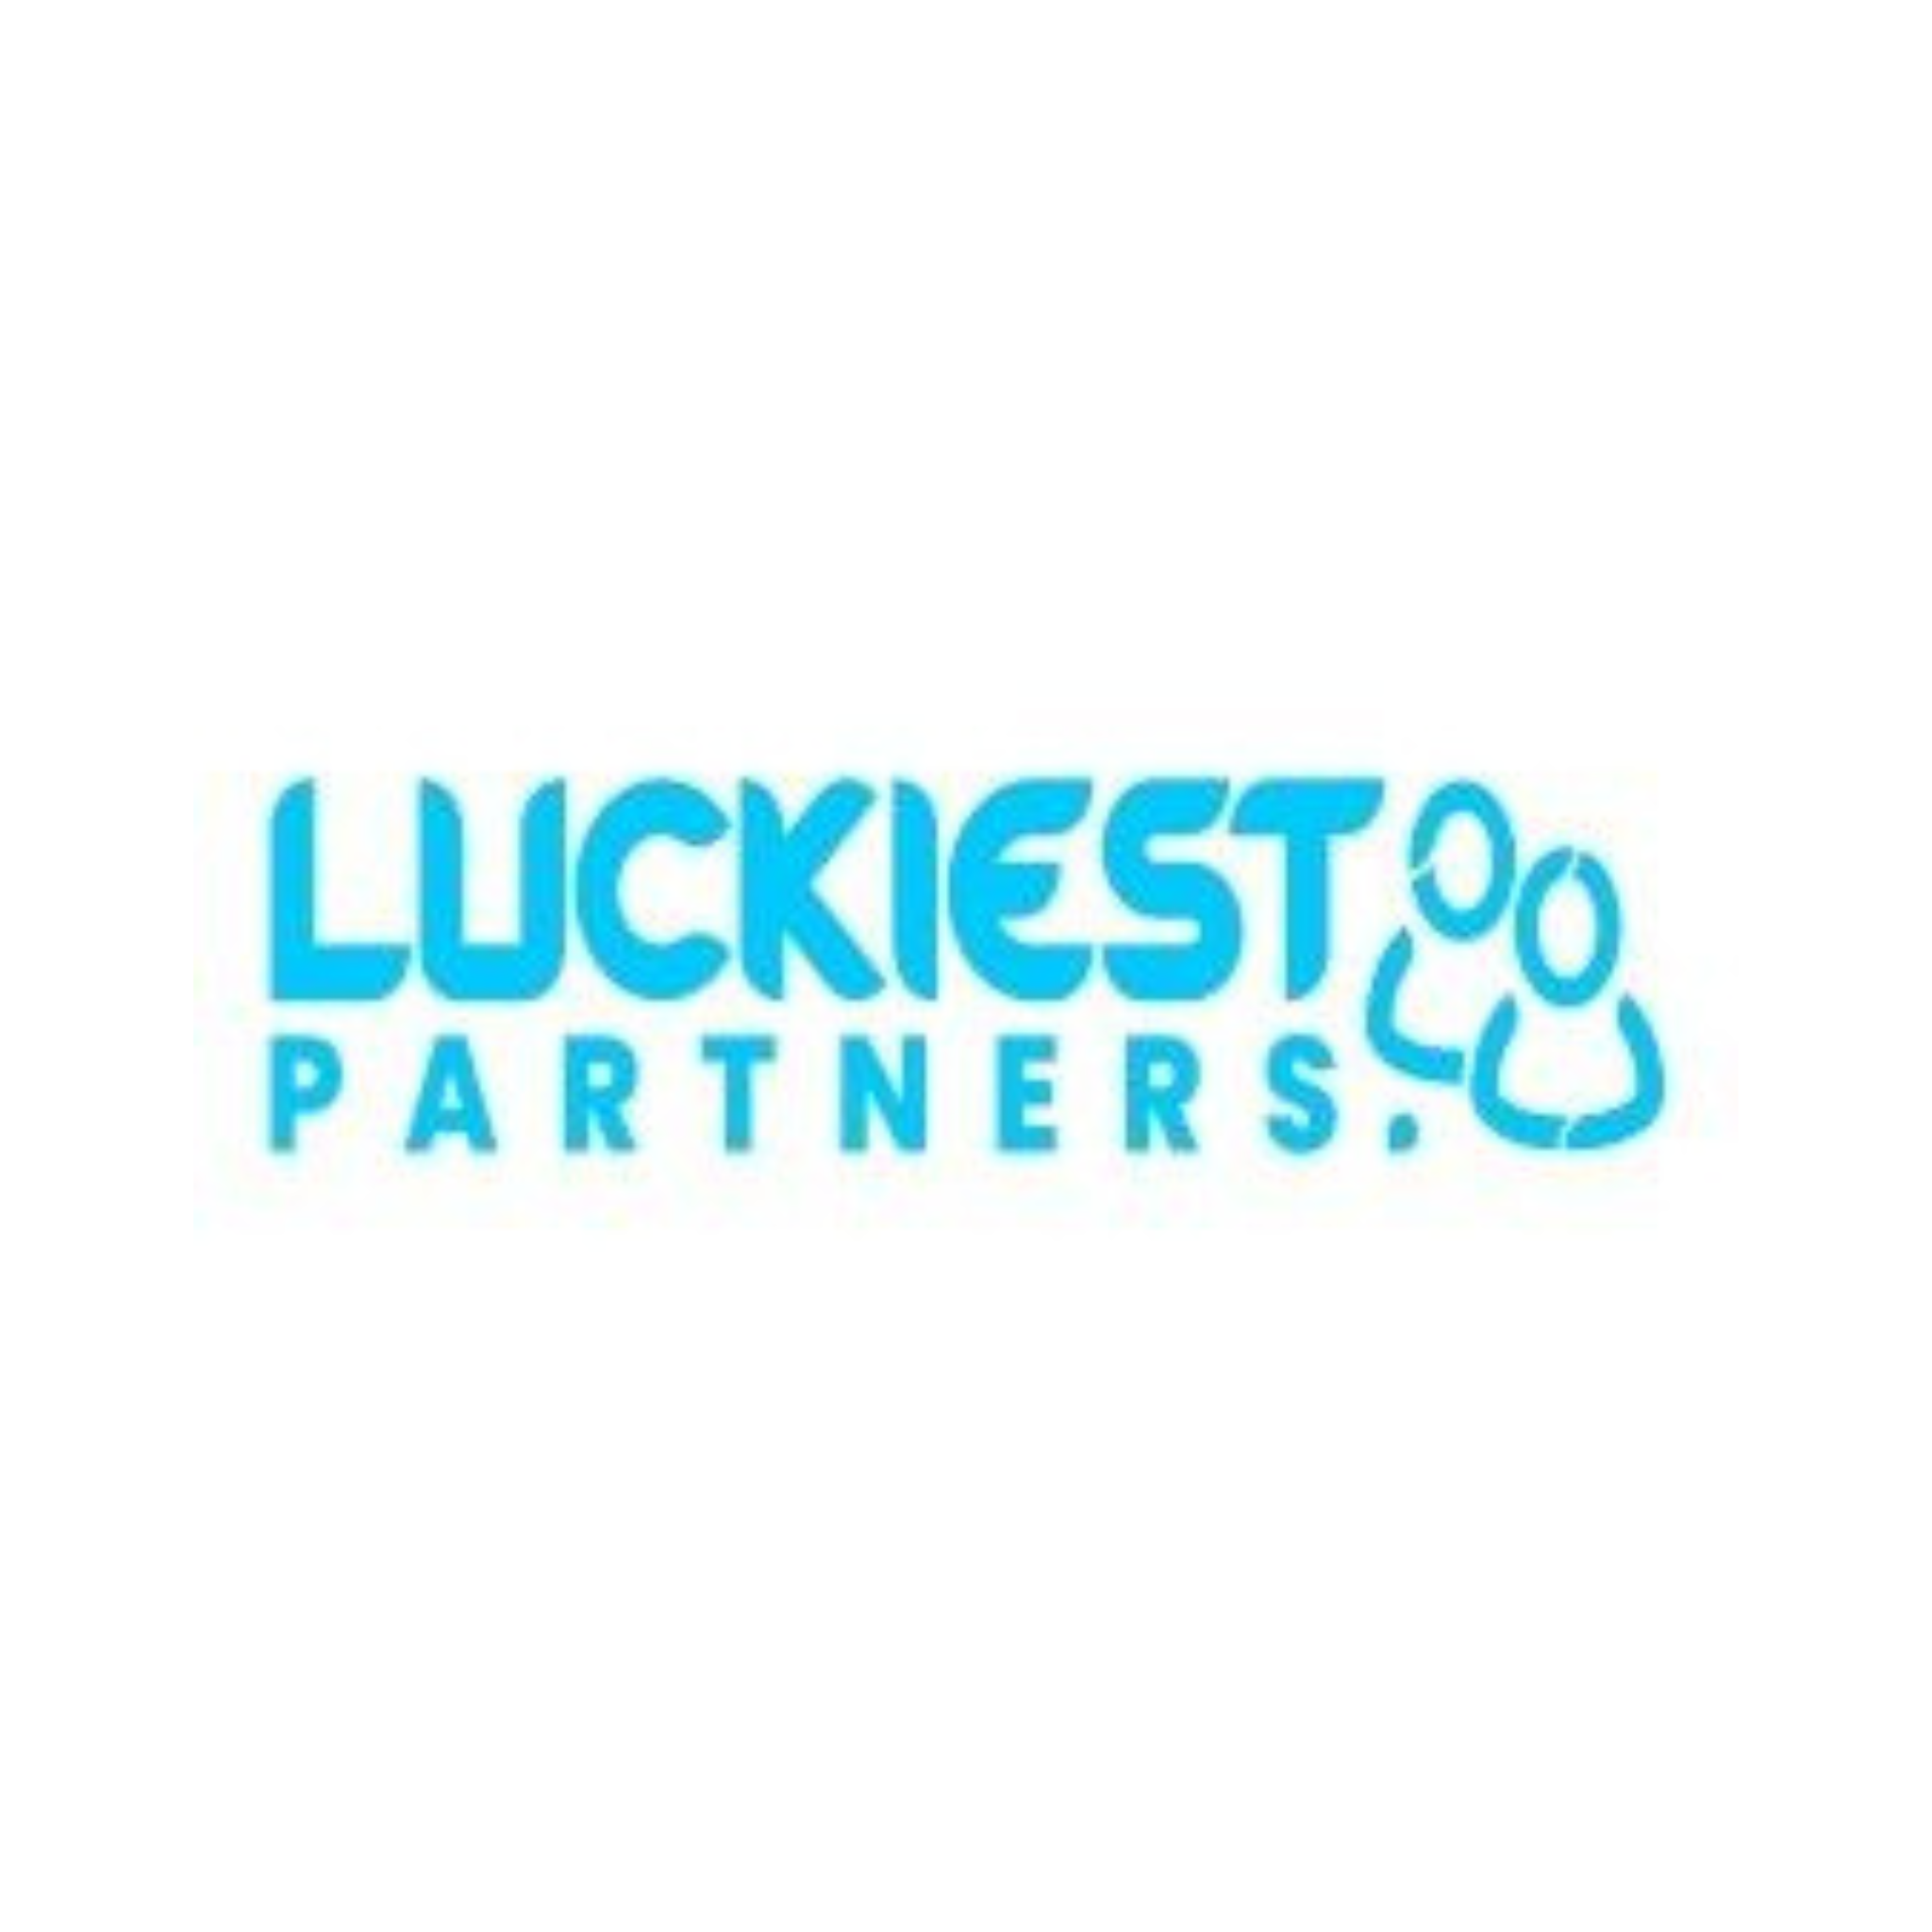 Luckiest Partners